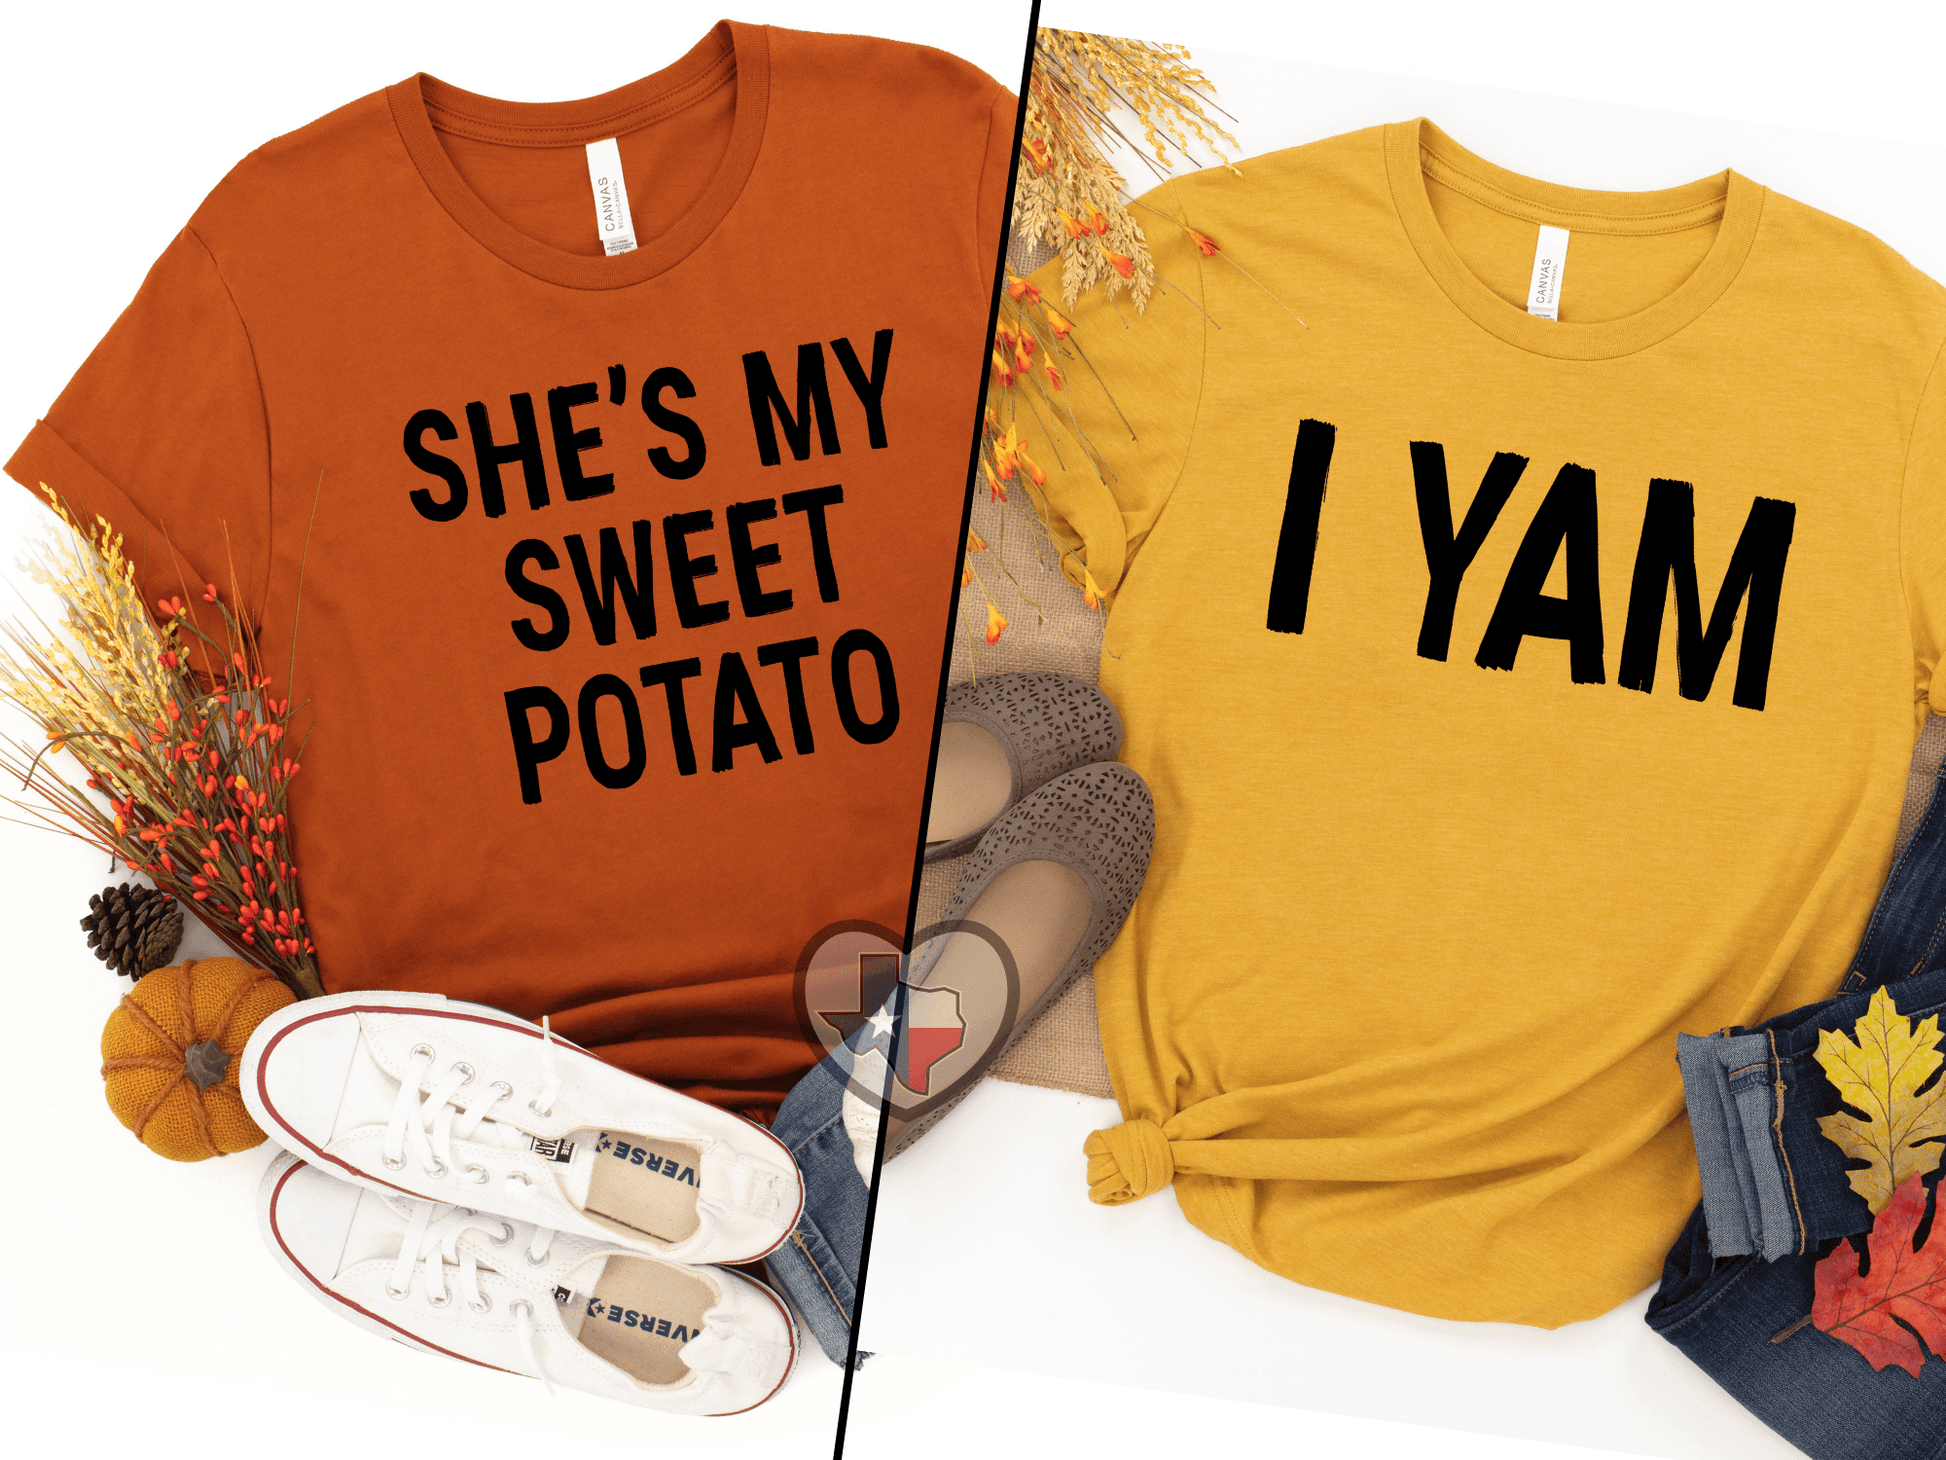 She's My Sweet Potato/I Yam SET - Texas Transfers and Designs